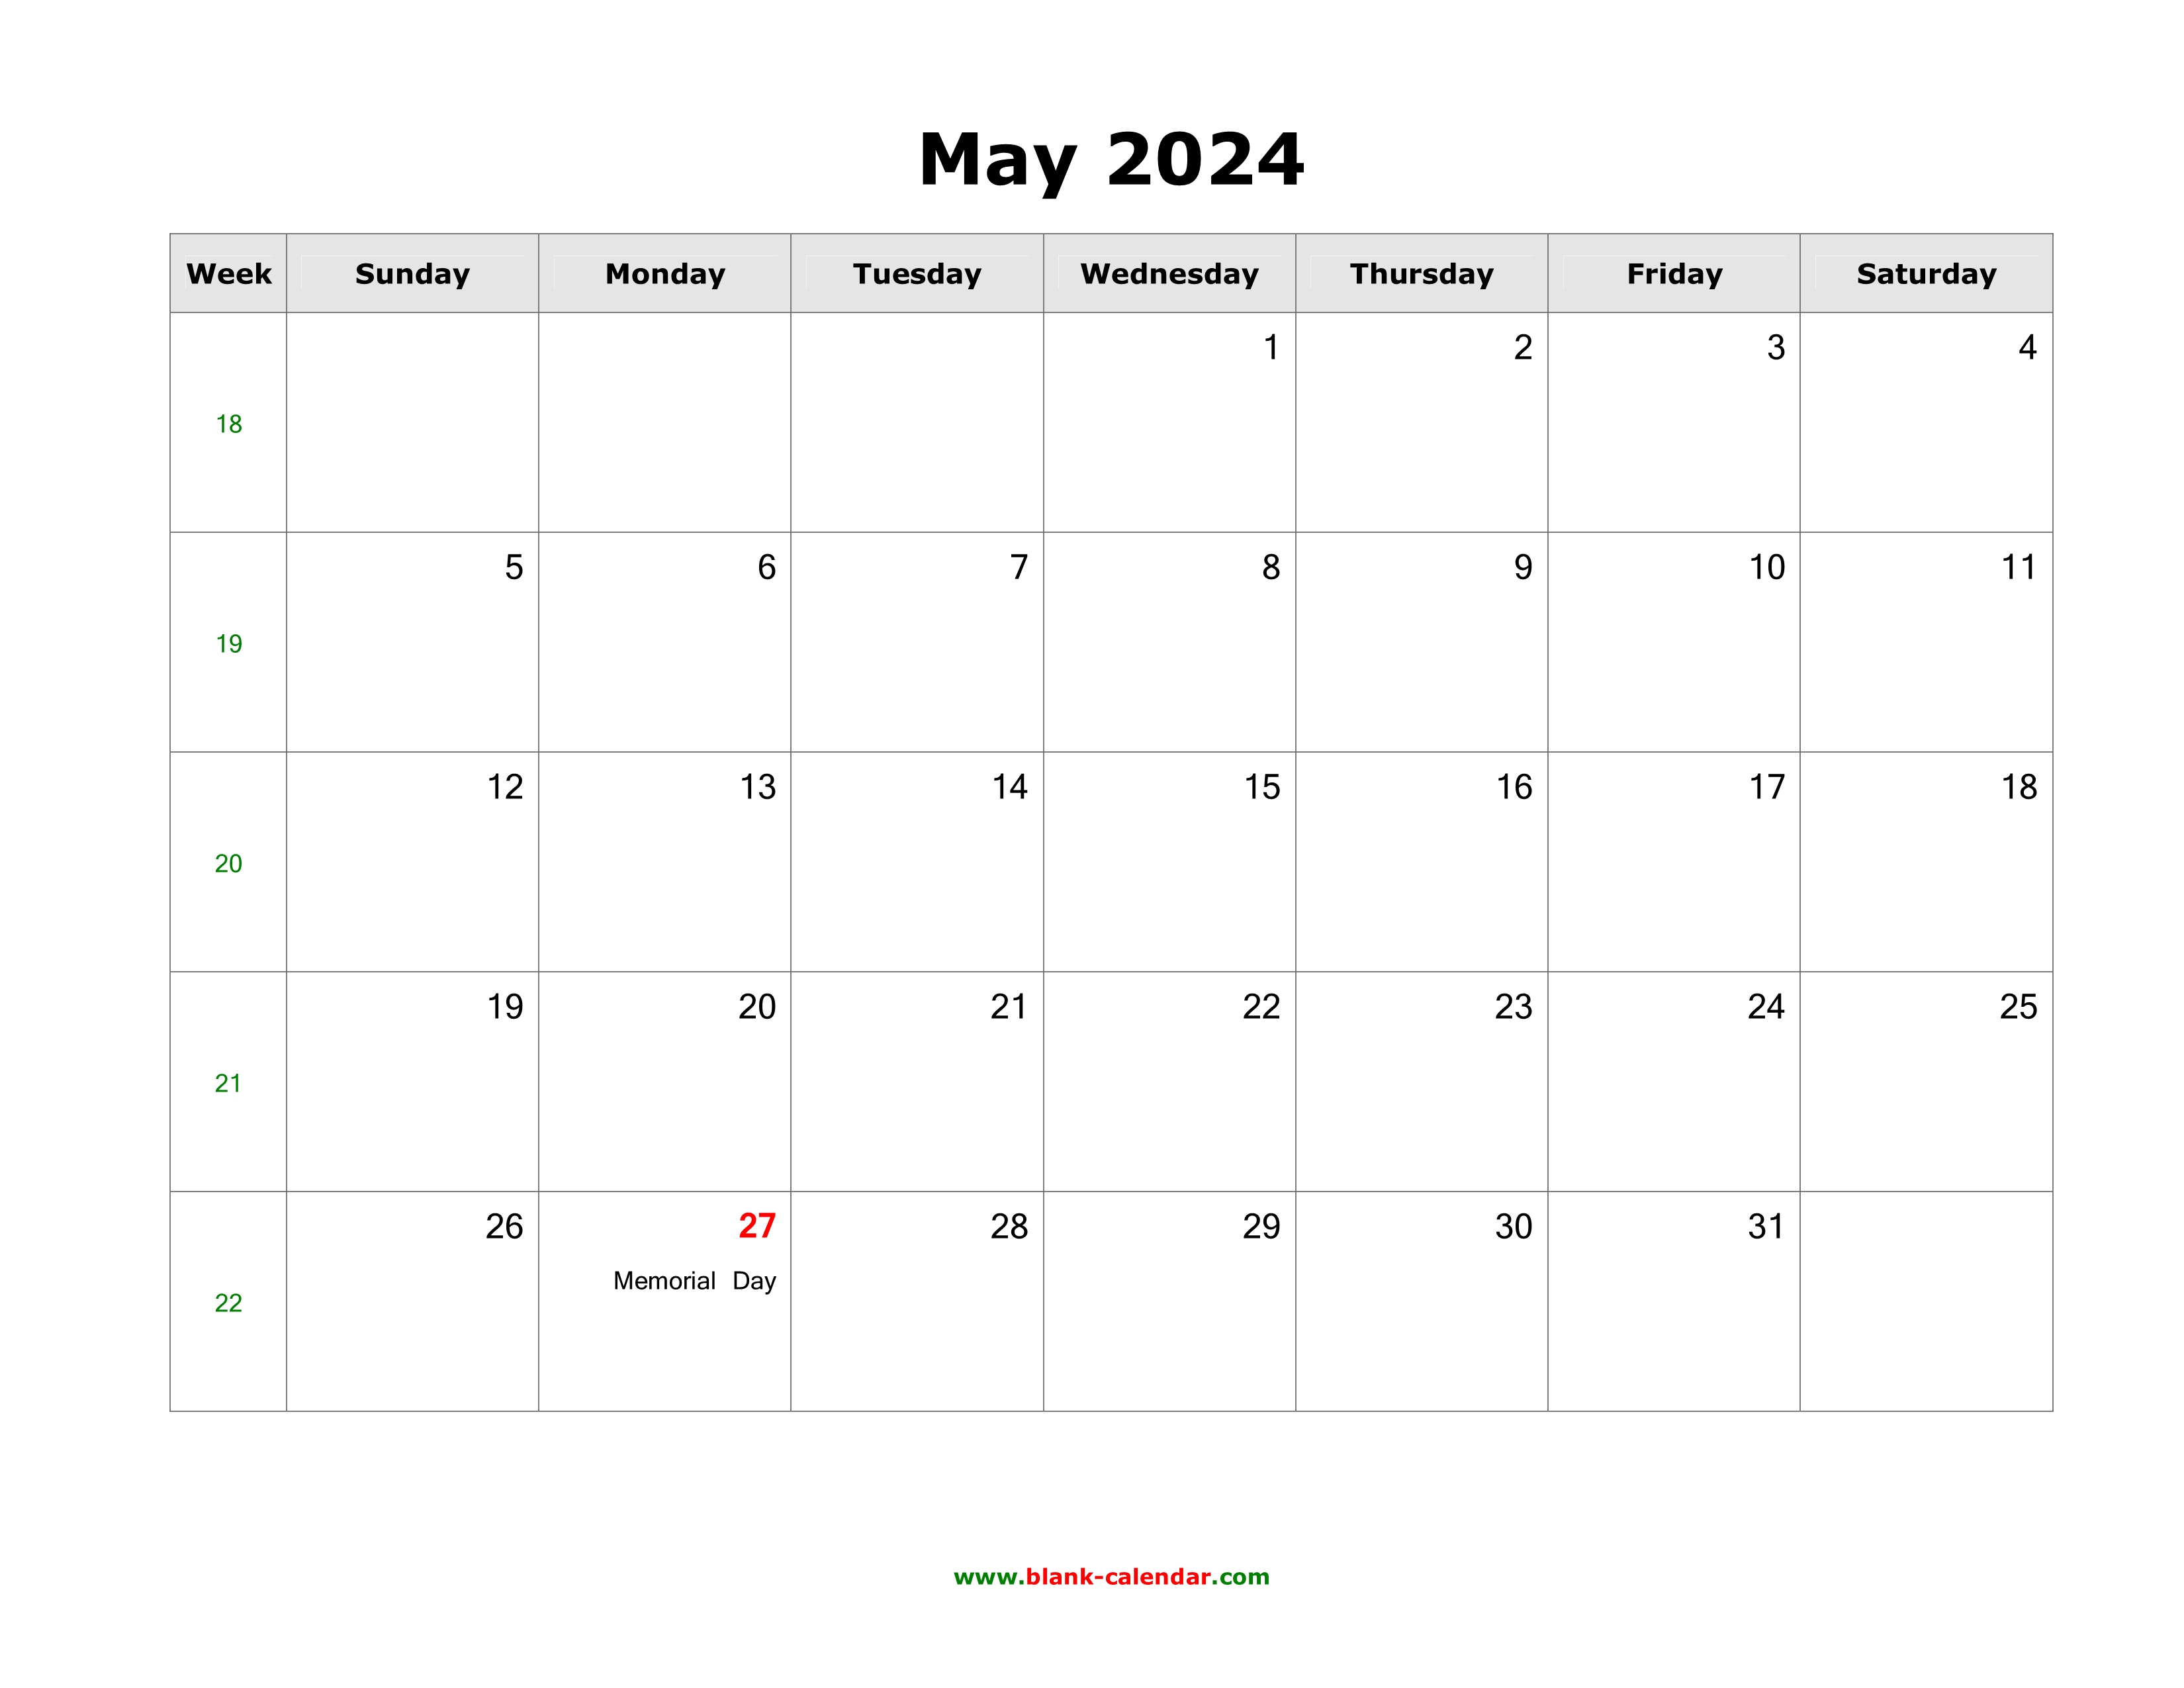 Download May 2024 Blank Calendar with US Holidays (horizontal)